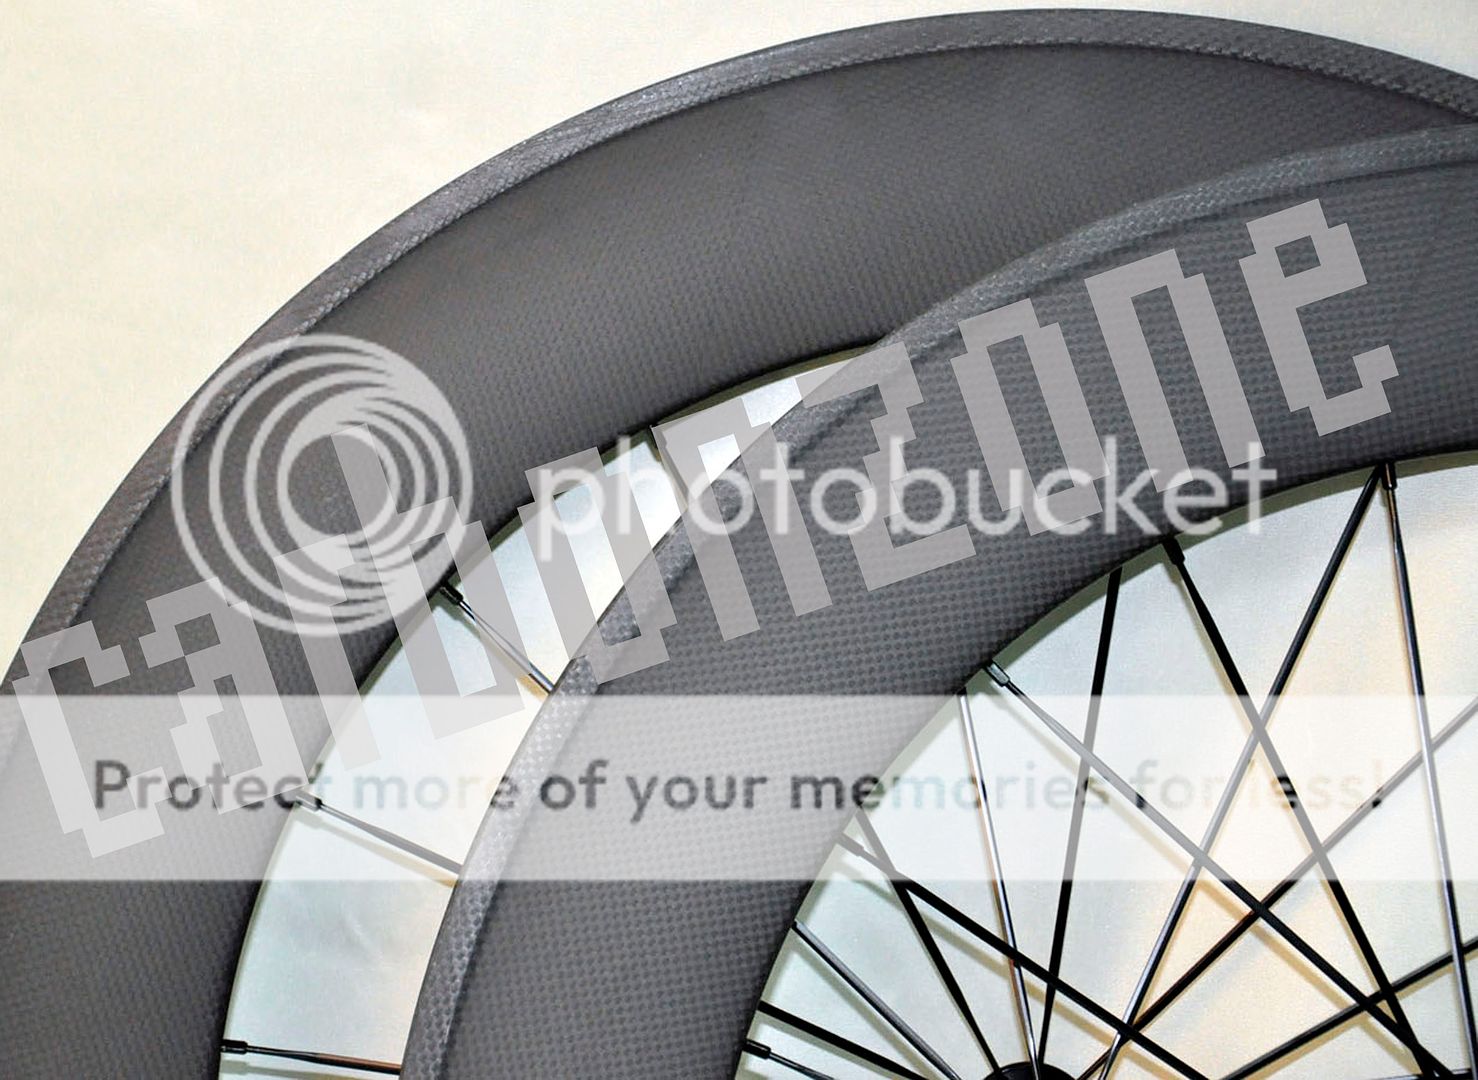 Wheels 700c Carbon Wheelset for Road TT Model Bicycle Wheels